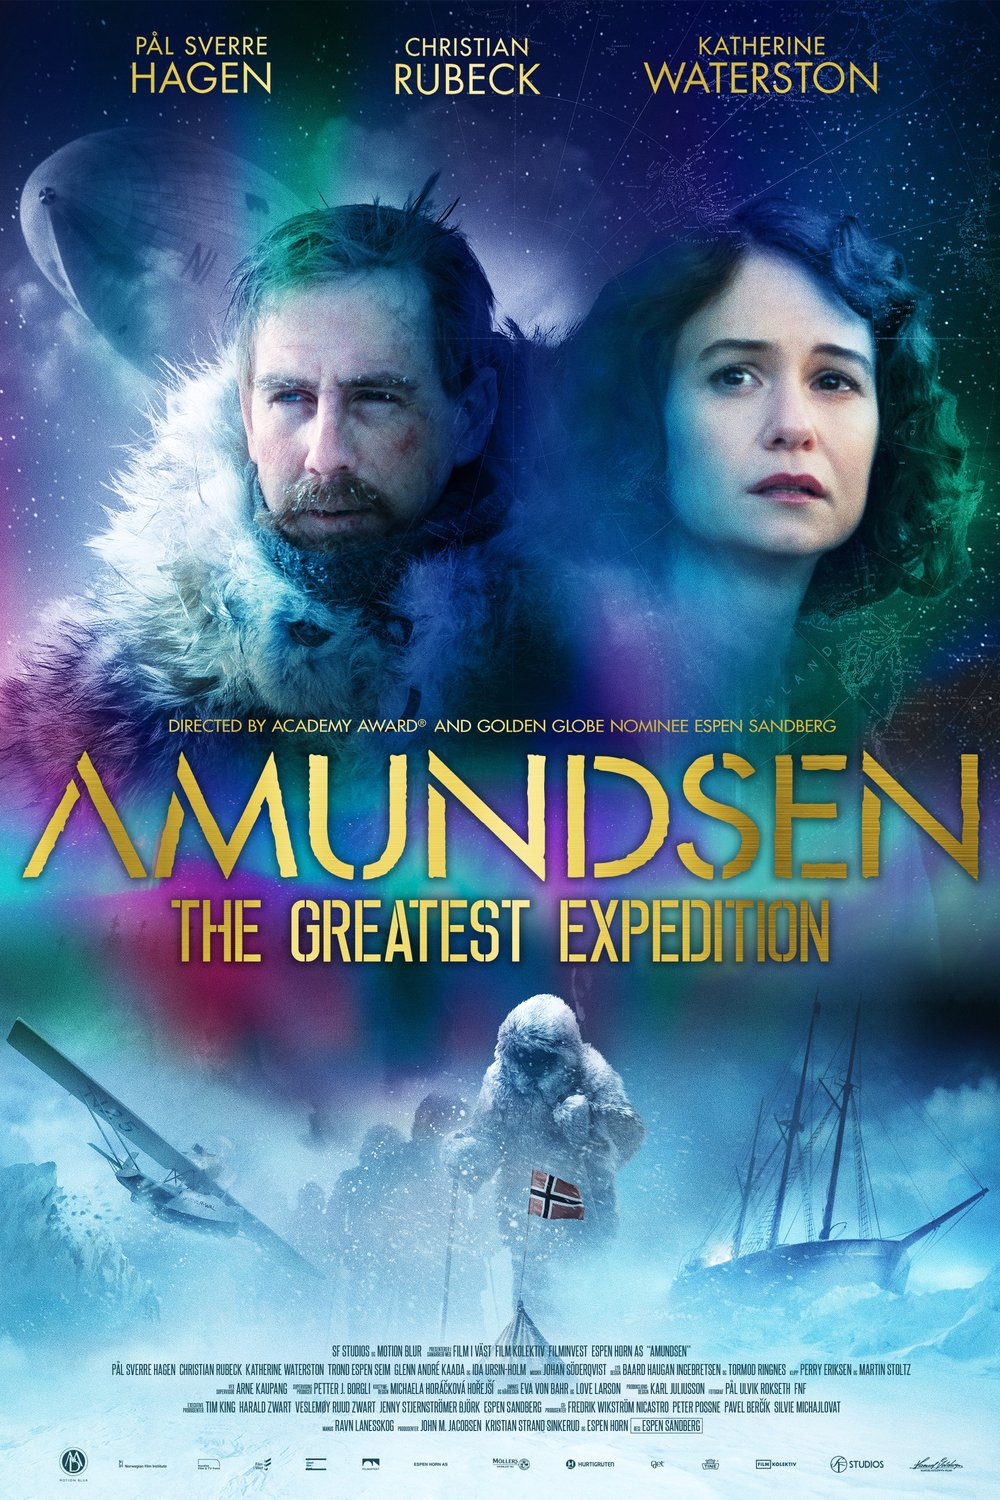 Poster of the movie Amundsen